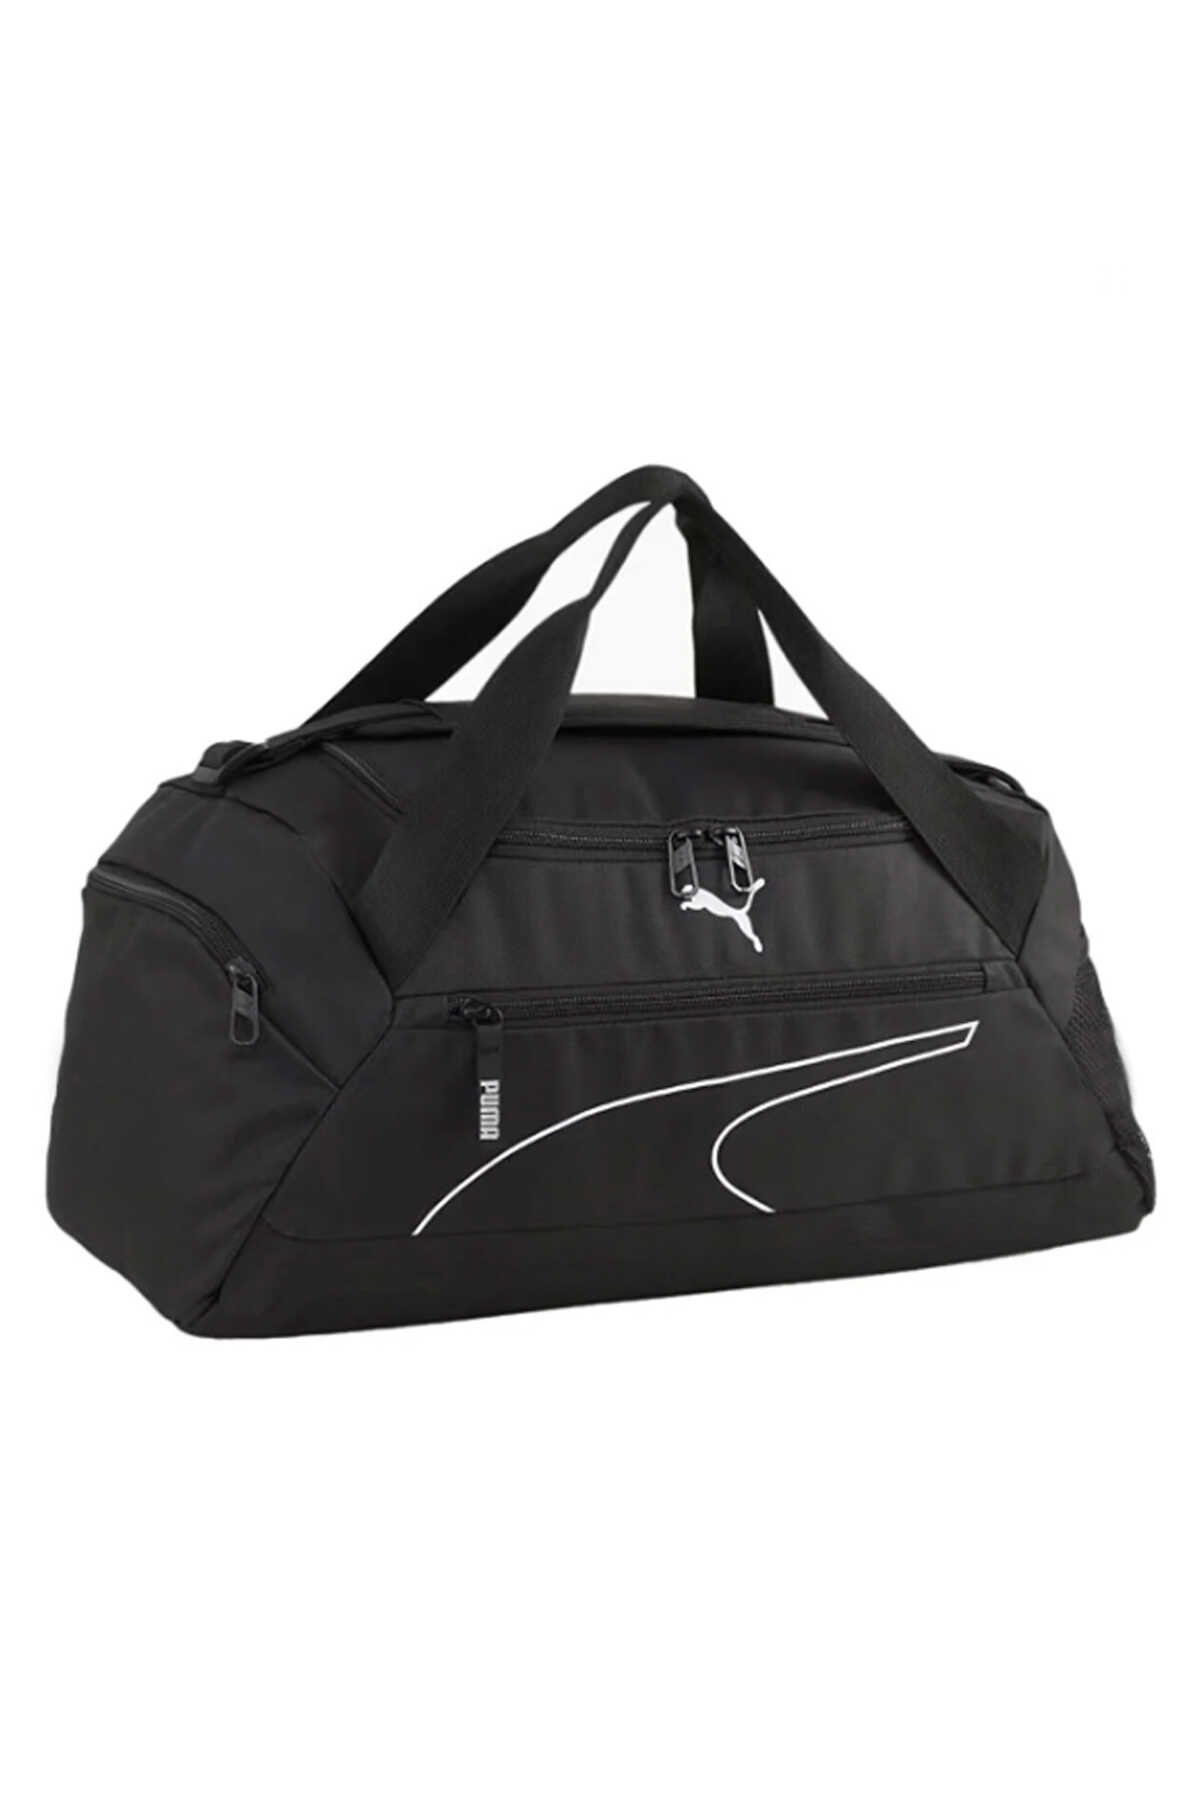 Puma - Puma Fundamentals Sports Bag Unisex Spor Çantası Siyah